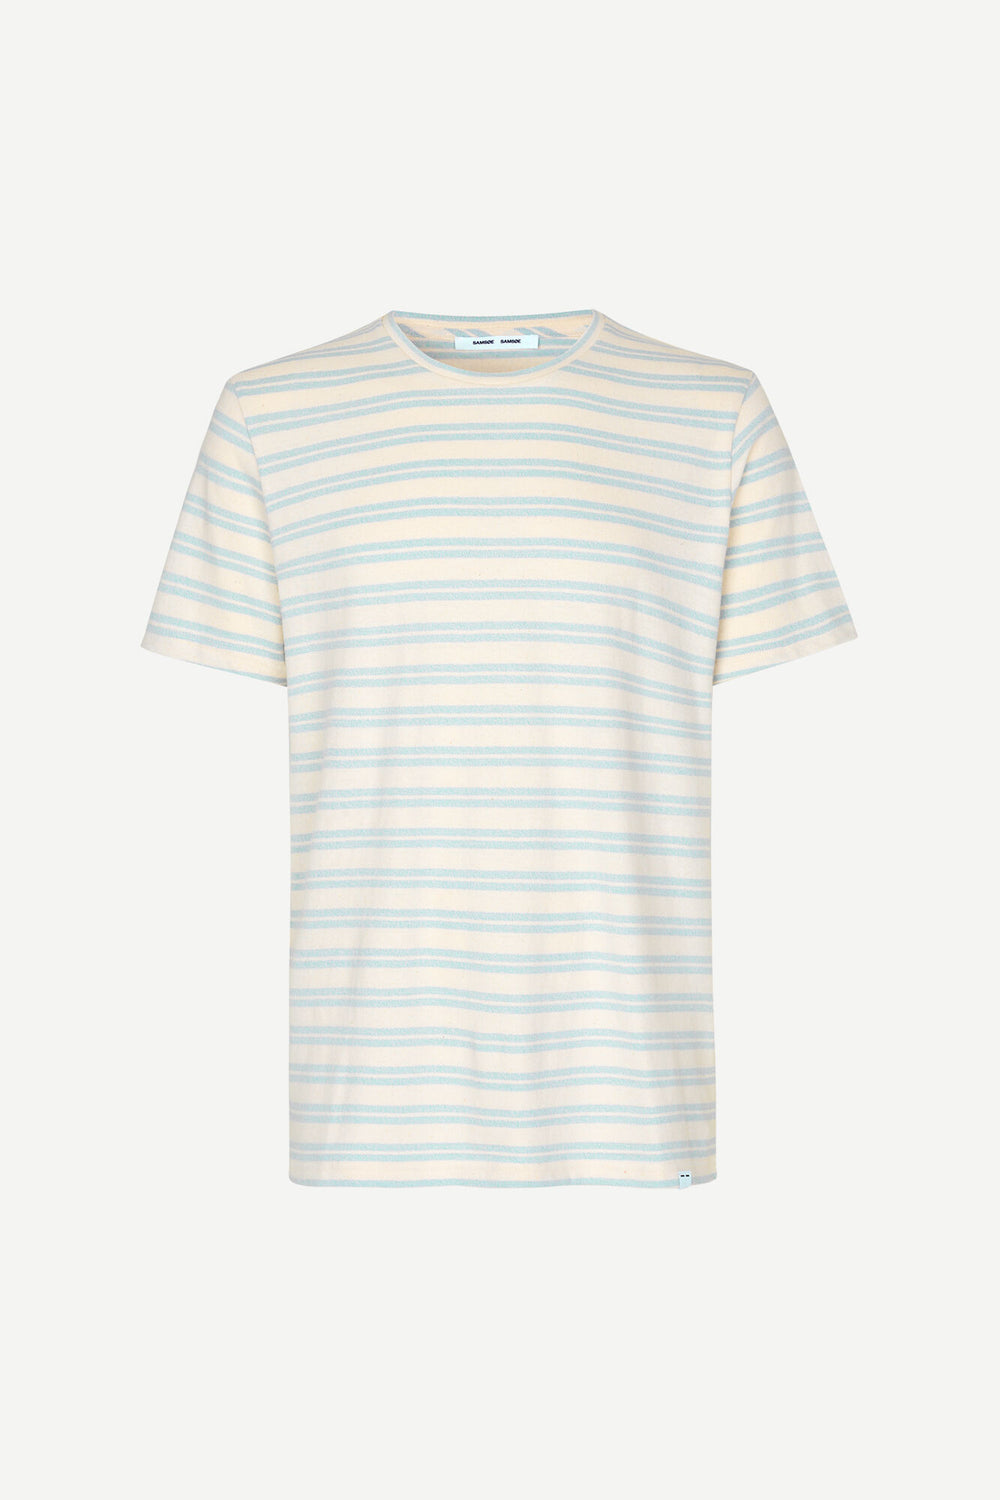 Samsøe Samsøe - Carpo x T-Shirt - Dusty Blue Stripe